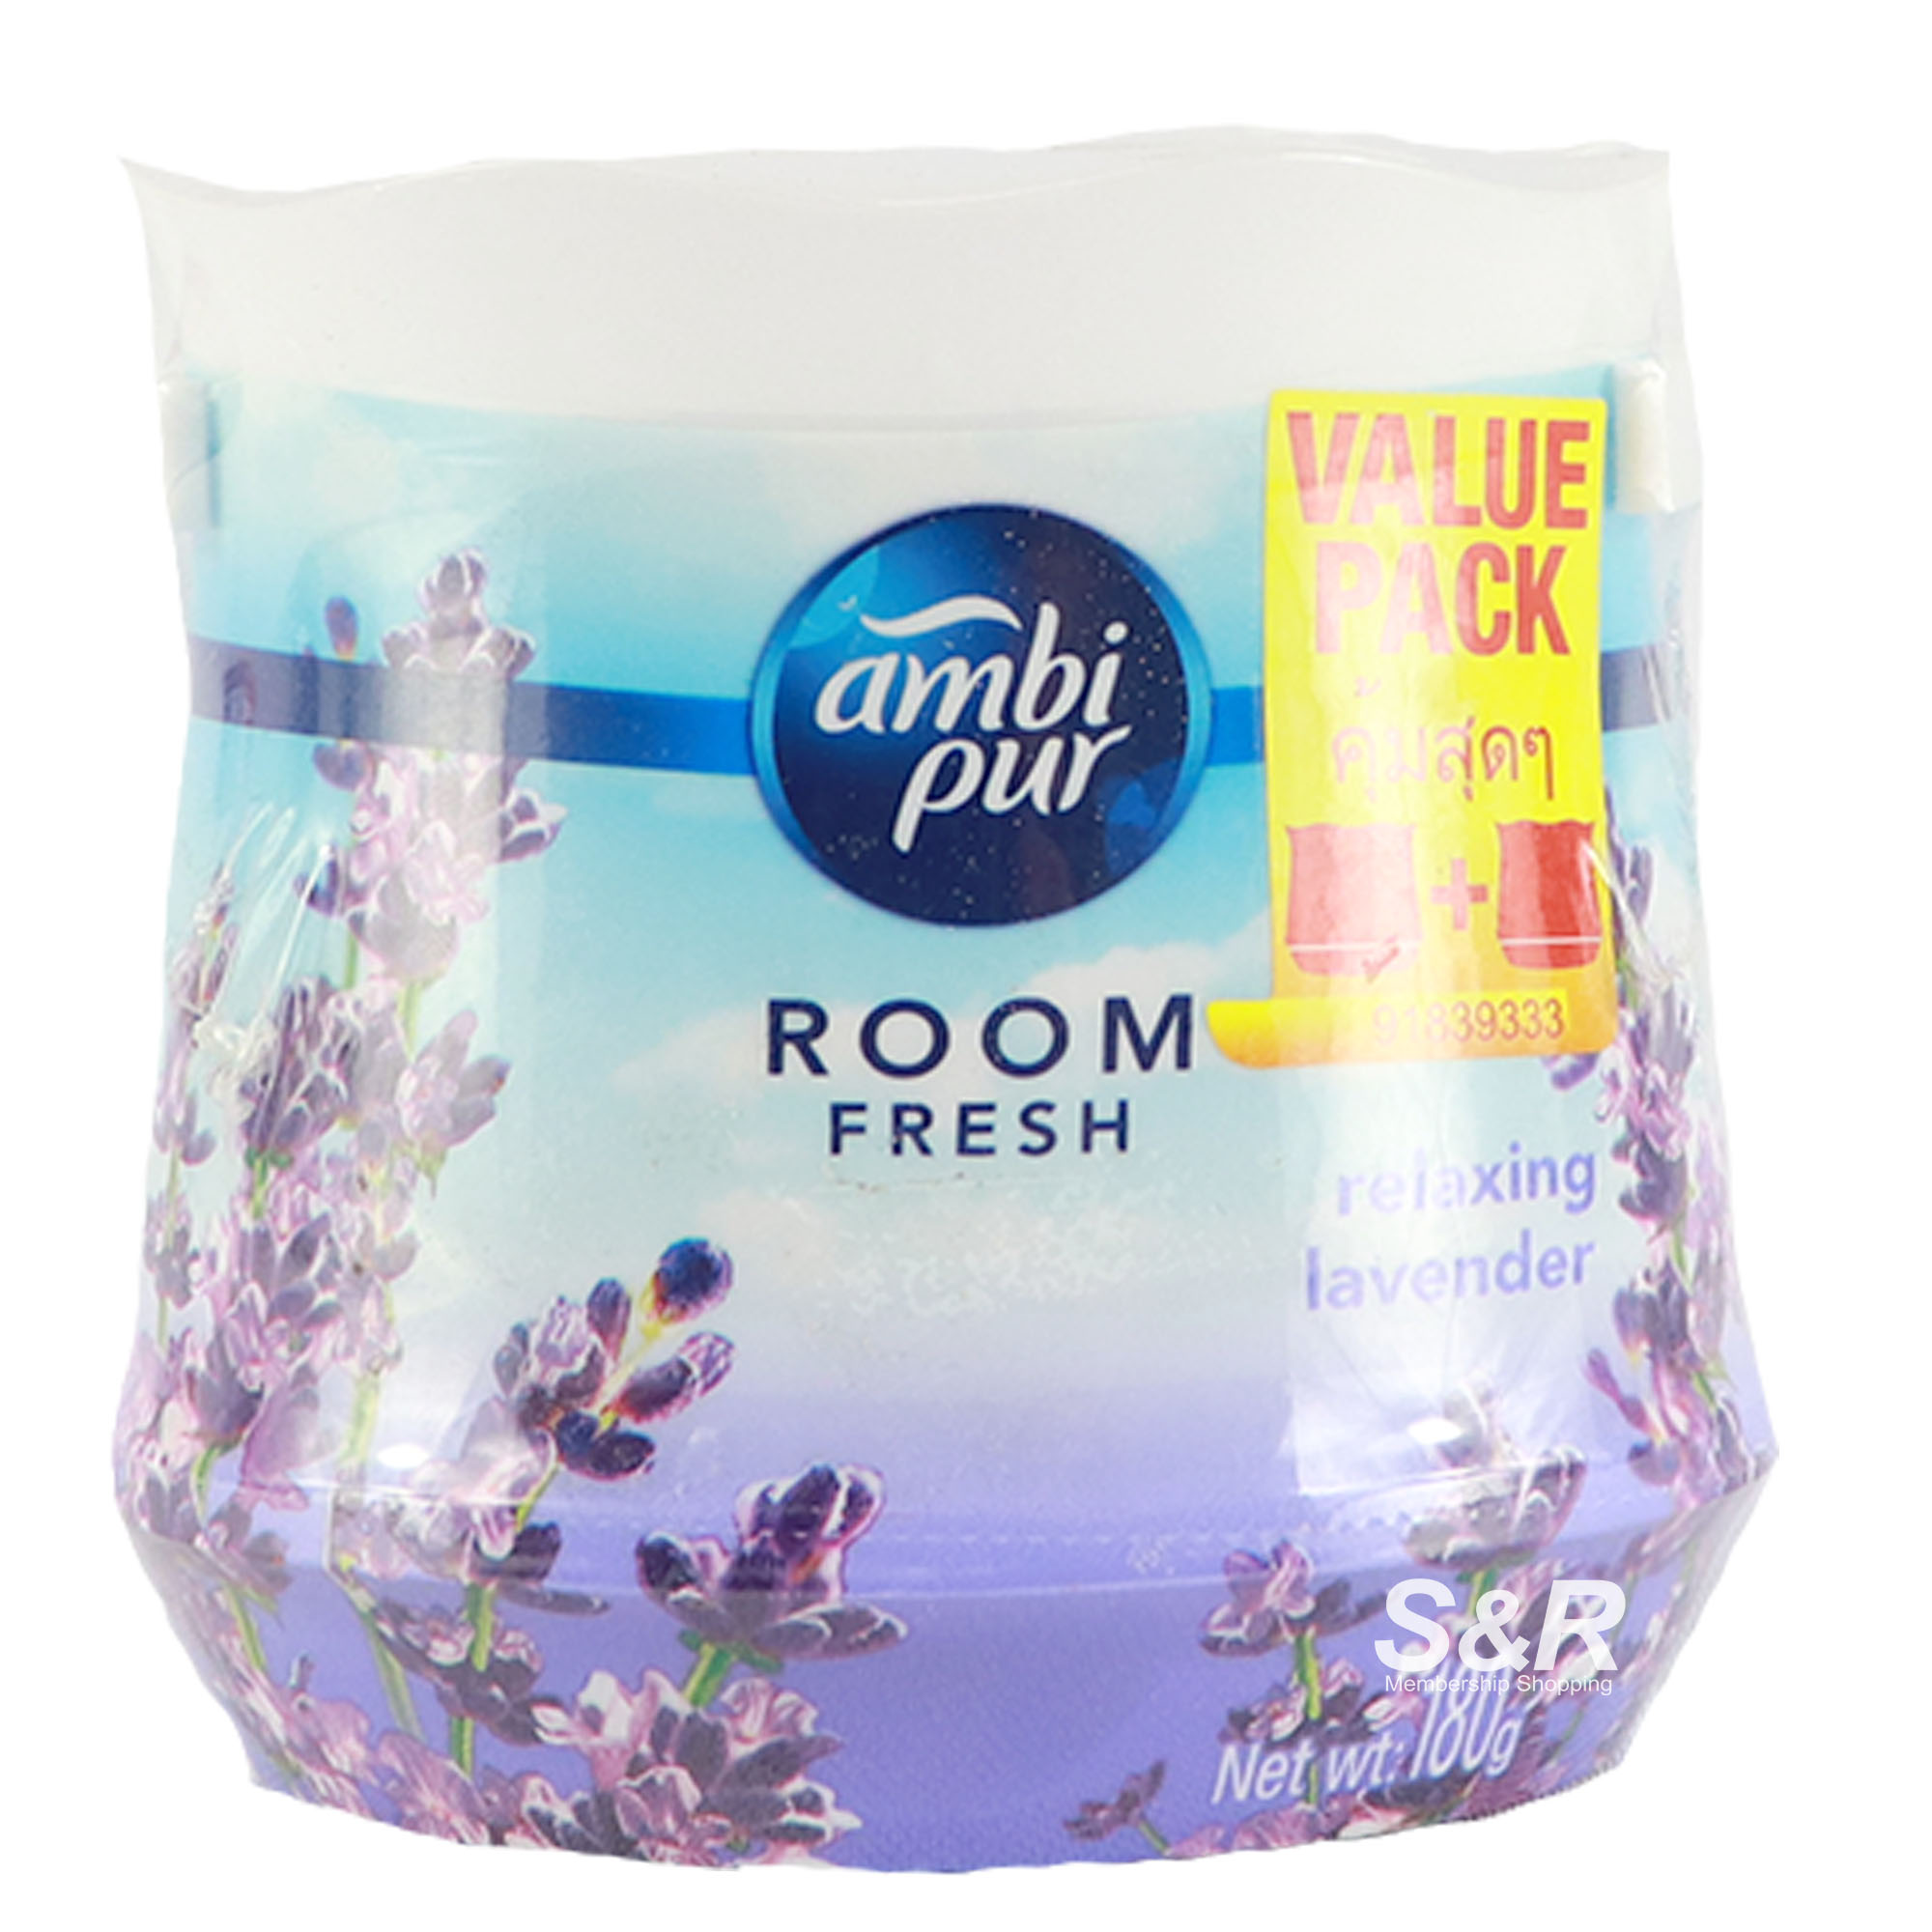 Ambi Pur Room Fresh Air Freshener Relaxing Lavender 2pcs